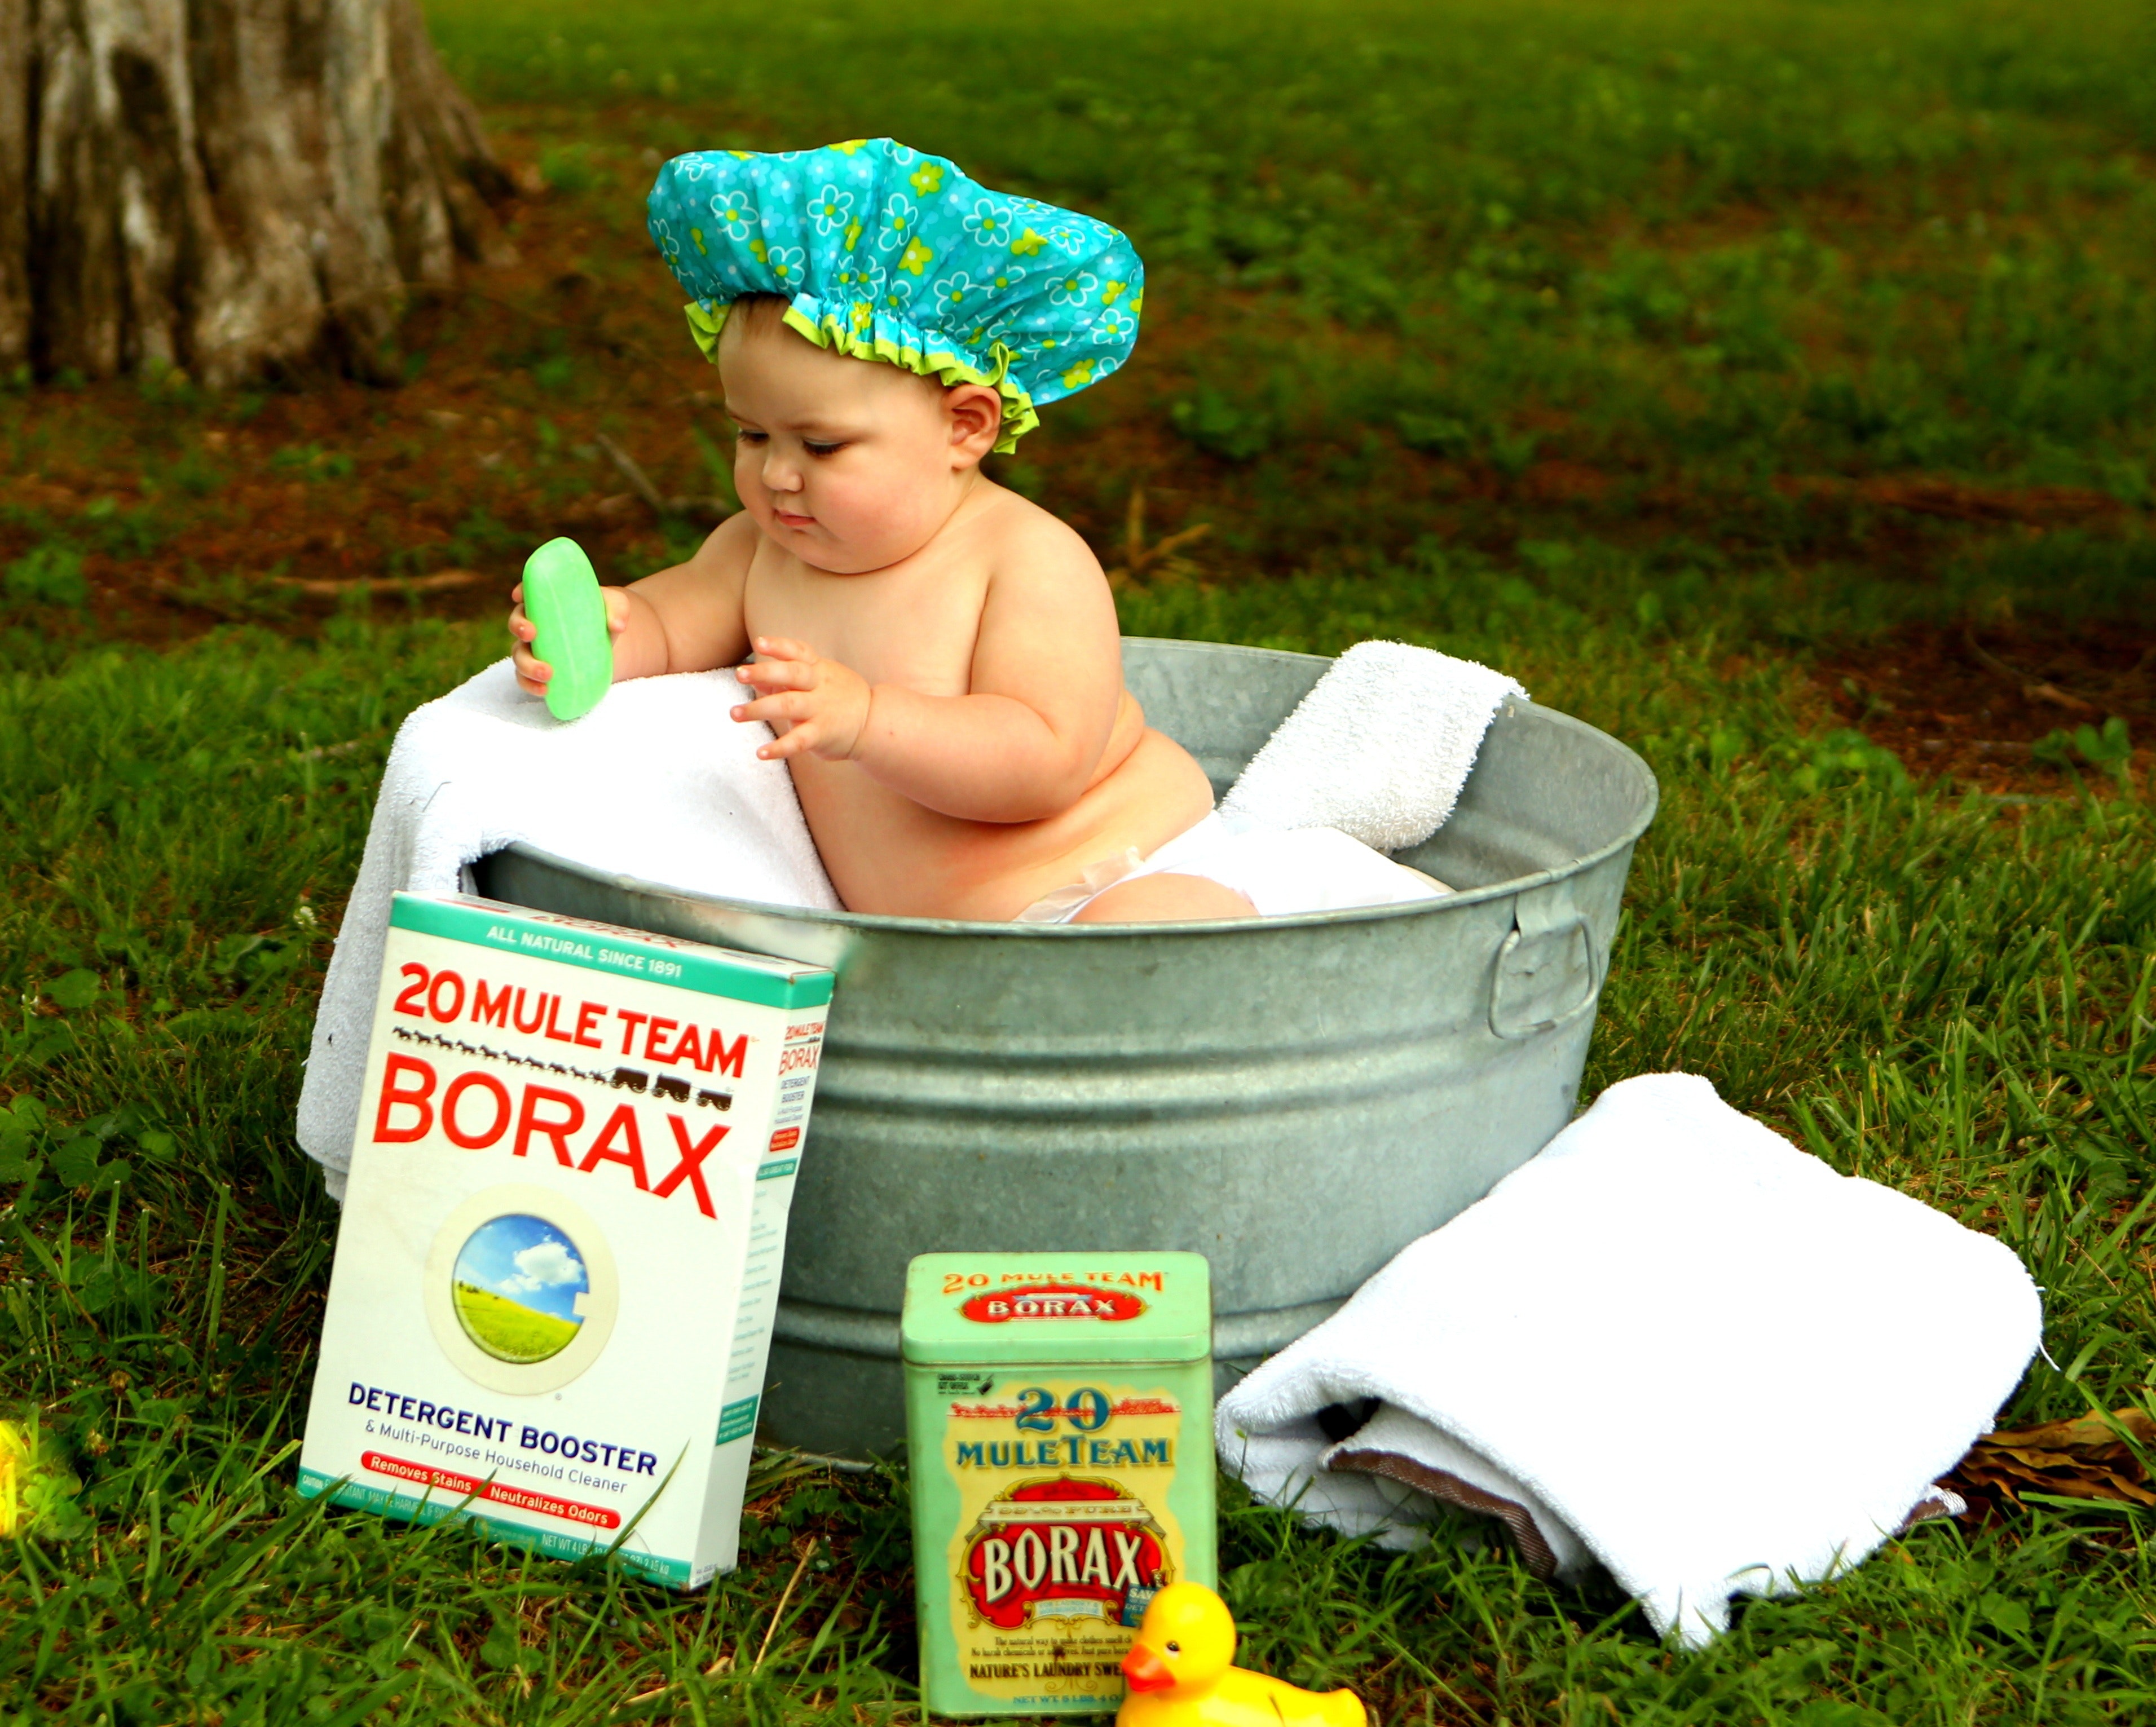 Shirtless Baby Boy in Galvanized Tub, Adorable, Galvanized tub, Washing, Toddler, HQ Photo